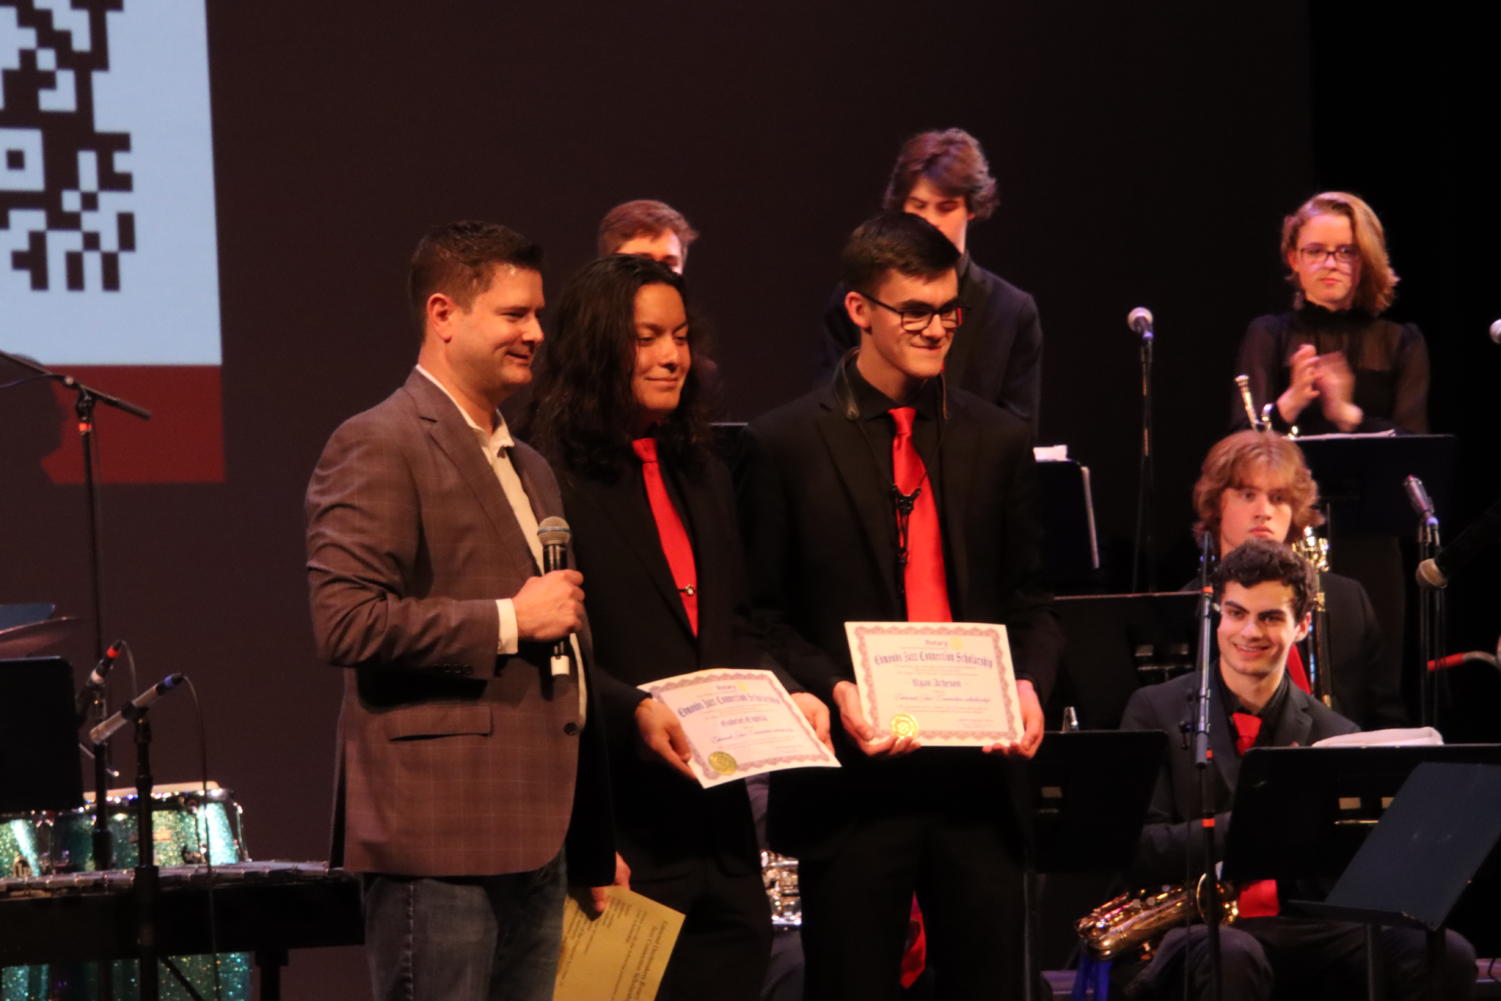 Gabriel Espitia and Ryan Acheson receiving their scholarship on stage 